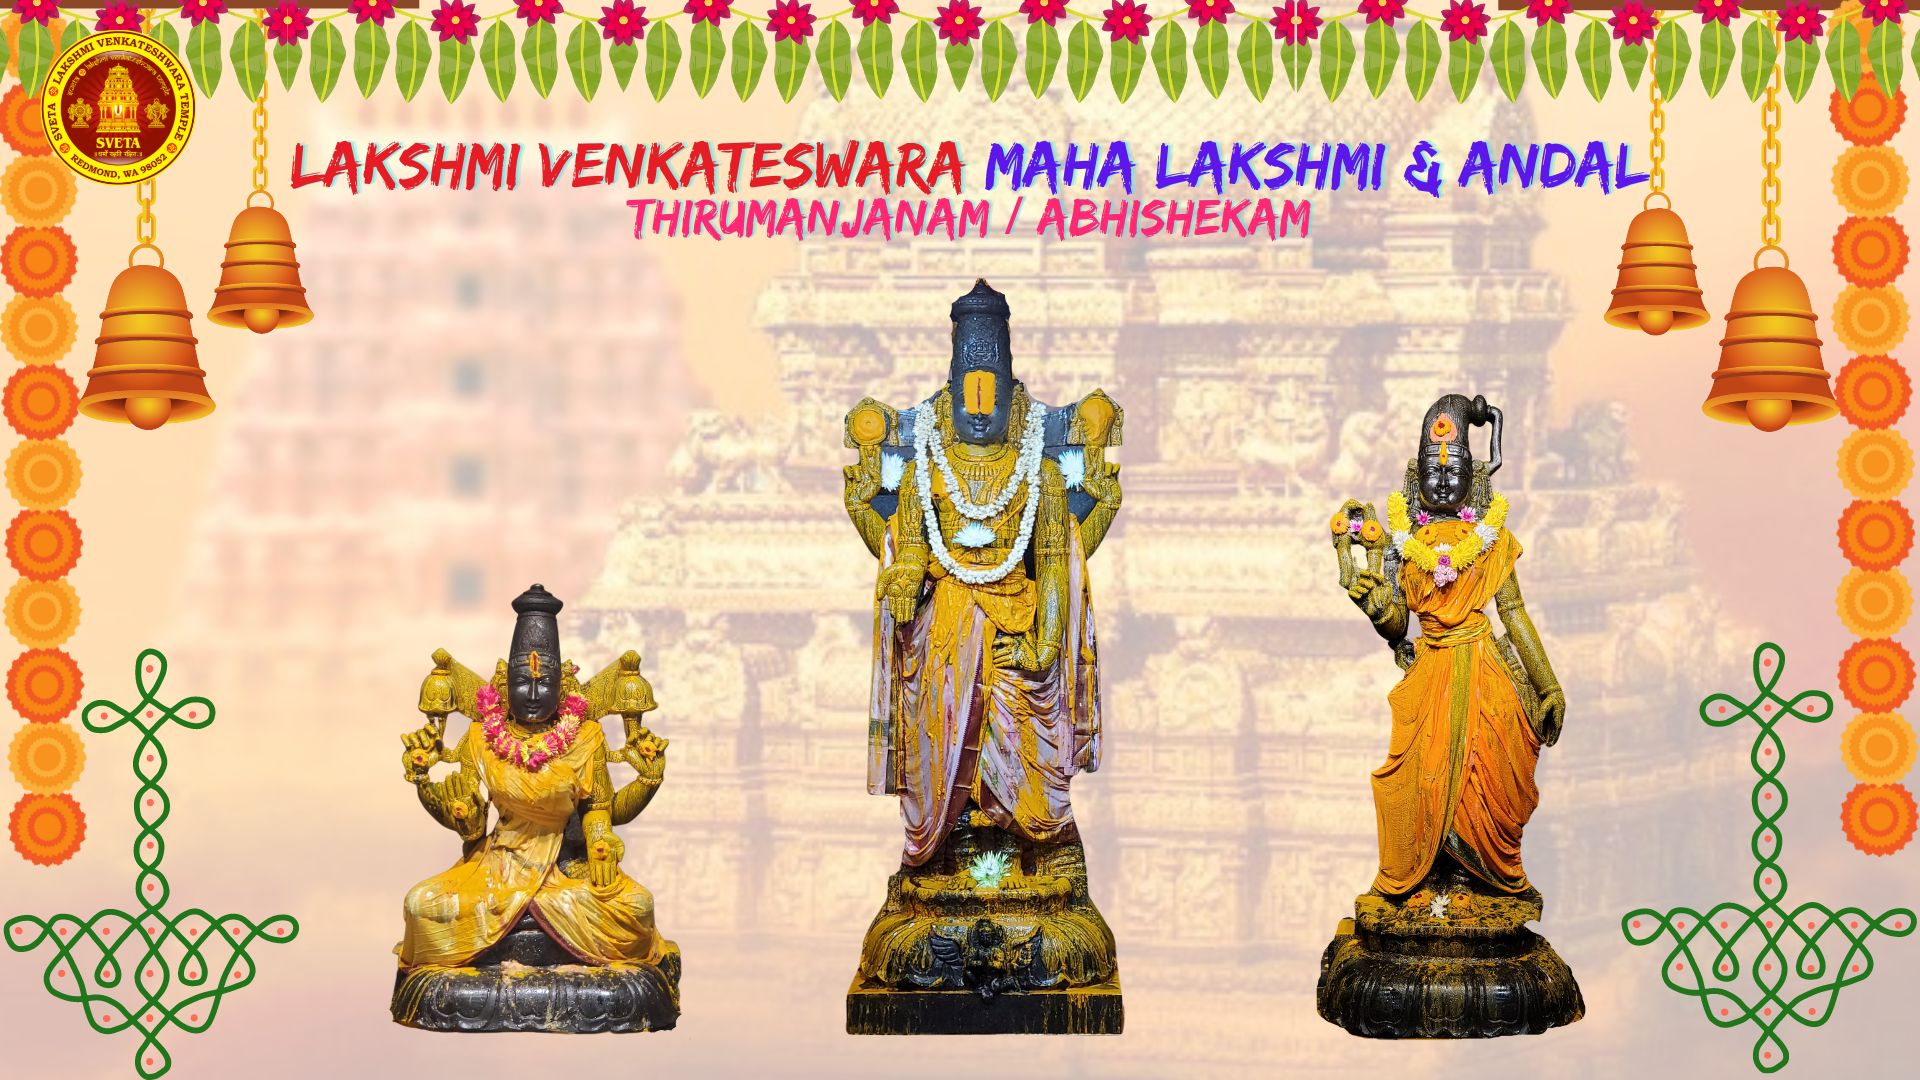 Lakshmi Venkateswara, Maha Lakshmi & Andal Abhishekam/Tirumanjanam - Home